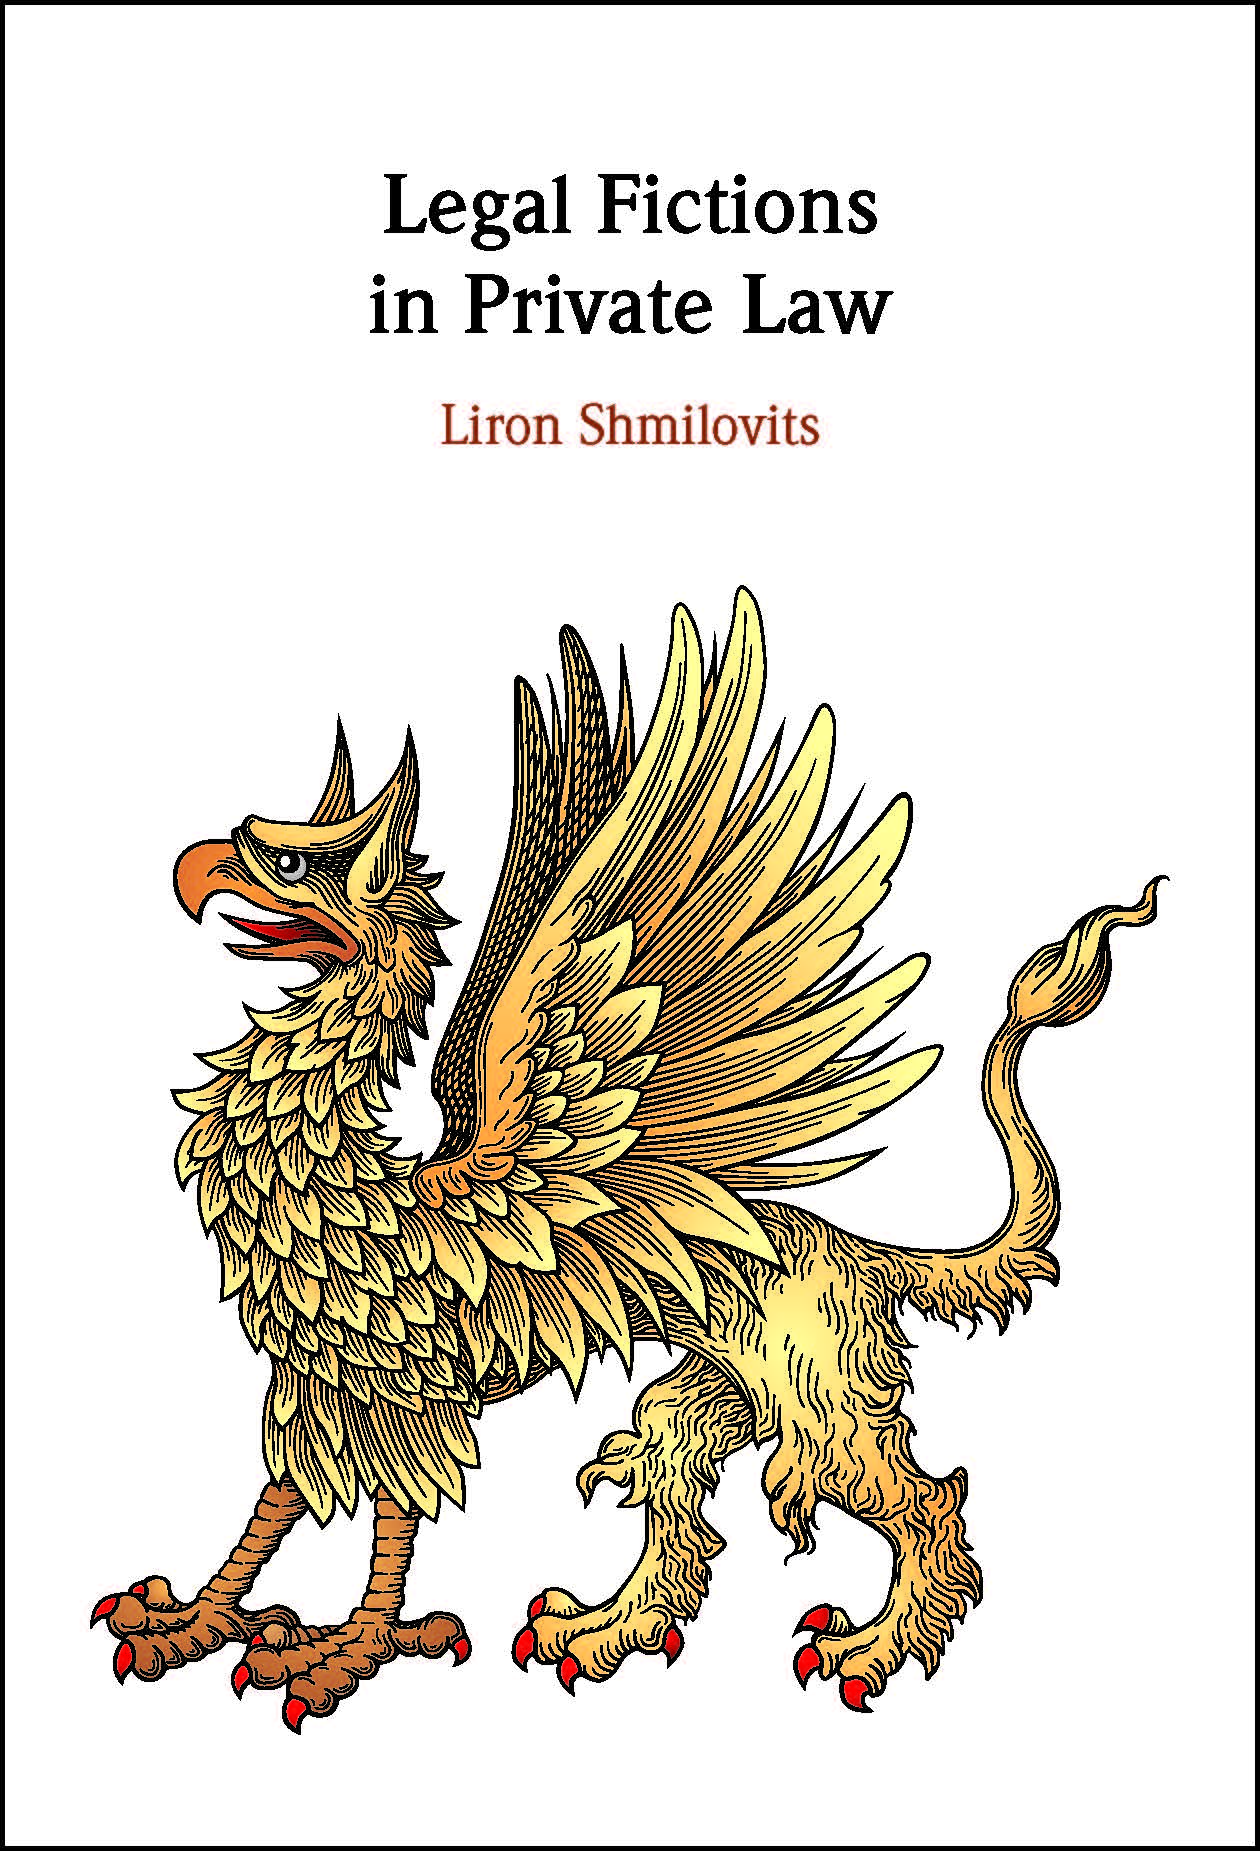 Legal Fictions in Private Law by Dr Liron Shmilovits